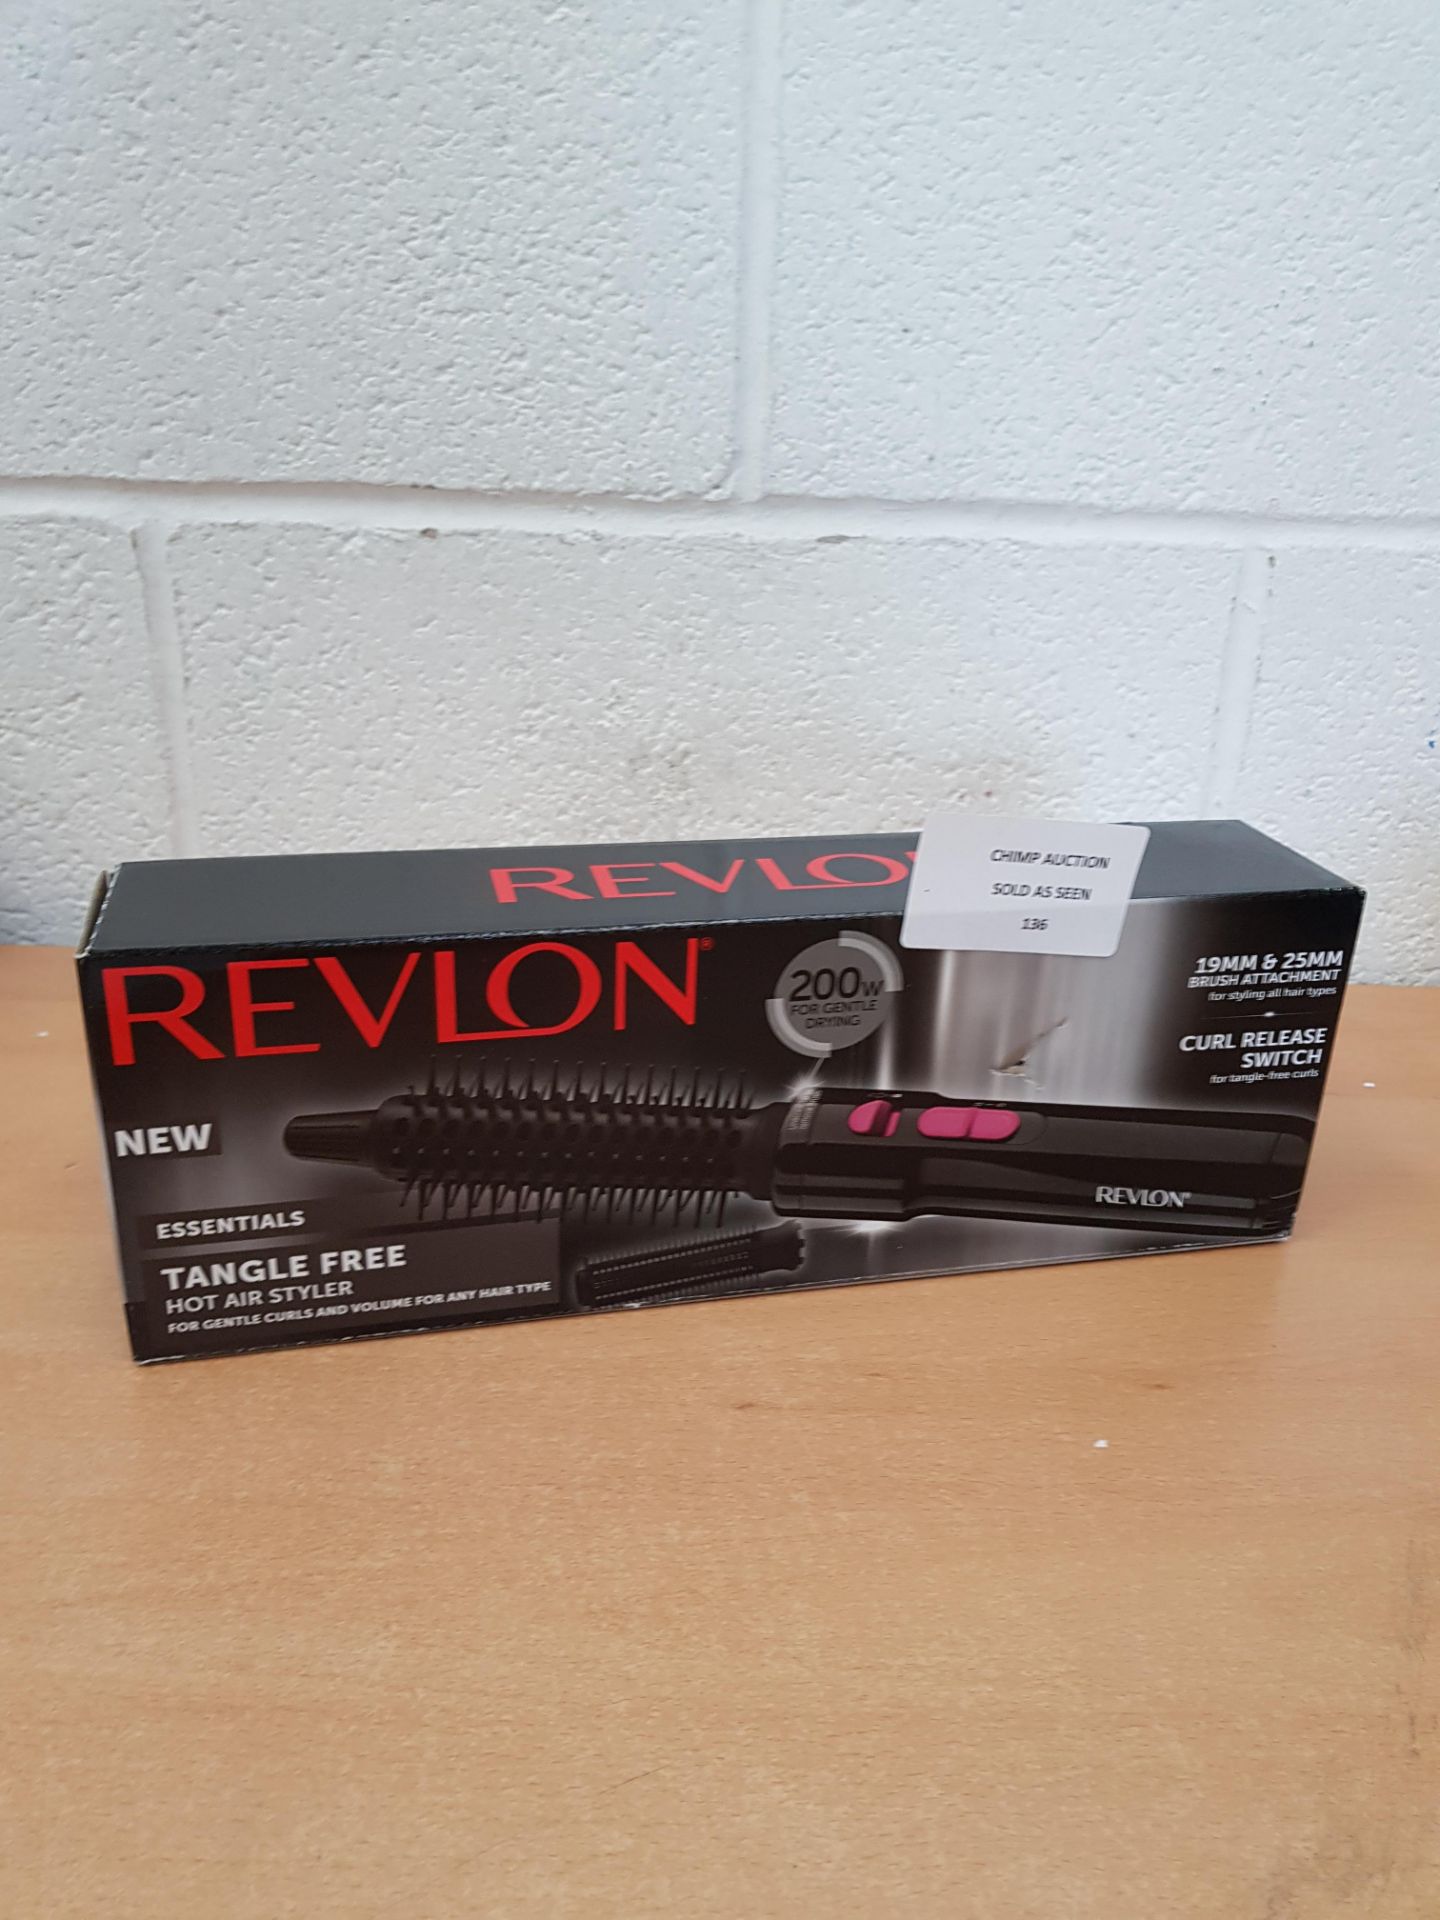 Revlon Essentials Tangle Free Hot Air Hair Styler